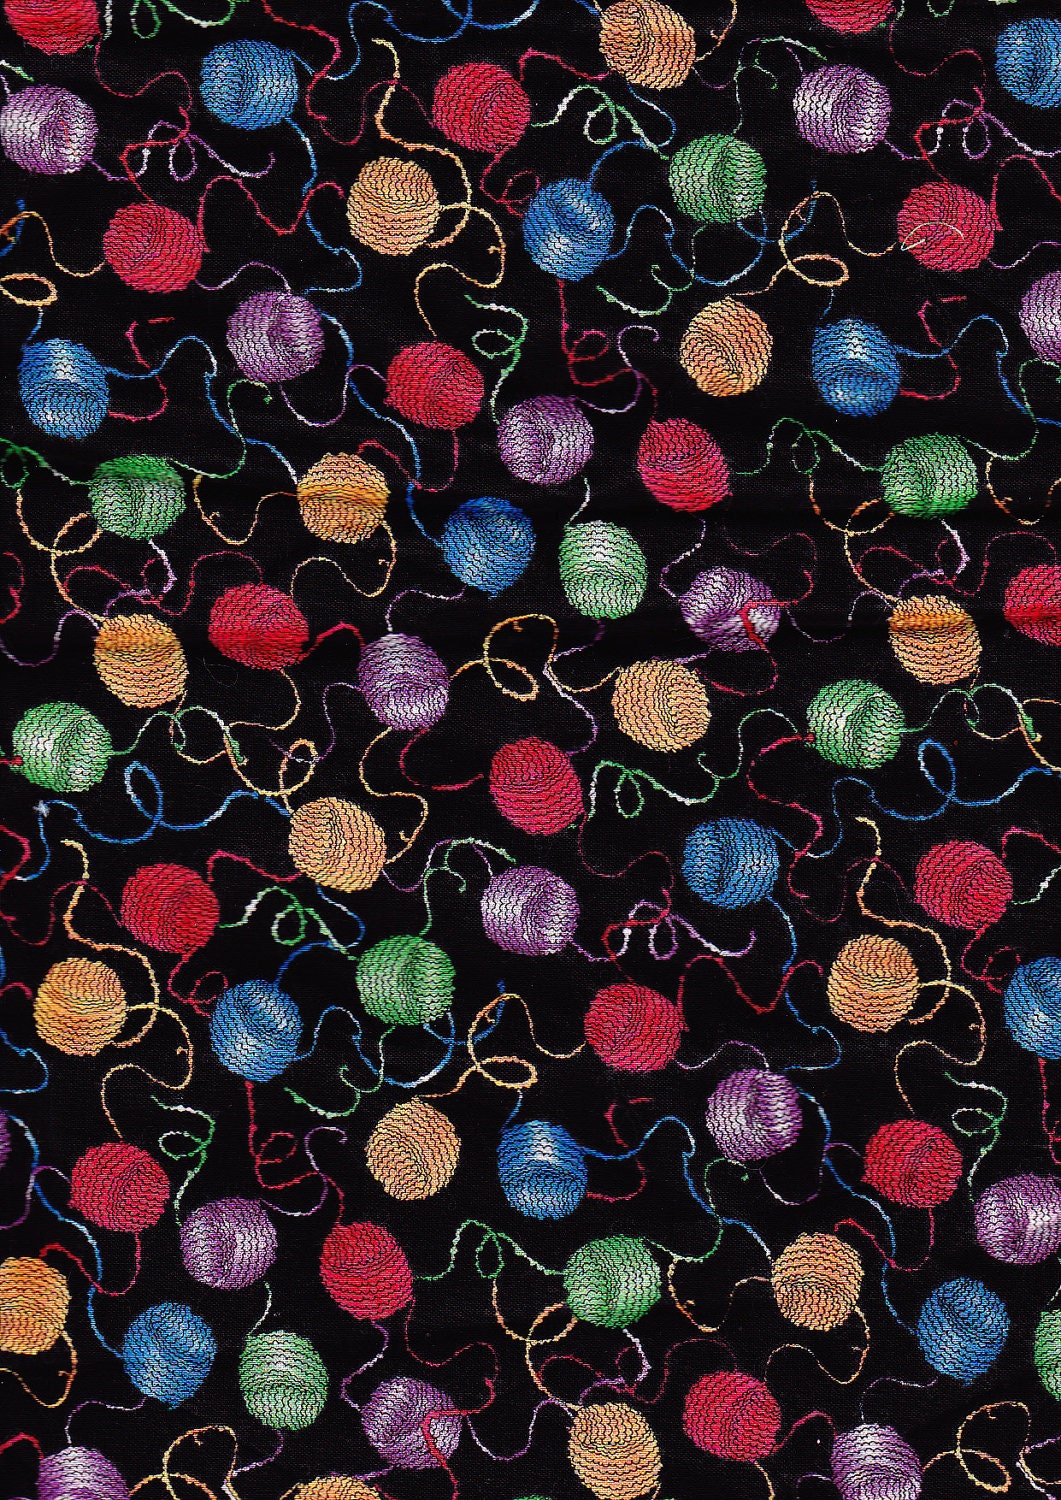 Krafty Kitties - Colorful Kitty Cat Yarn Balls Knitting Fabric - FabricAndTreasures